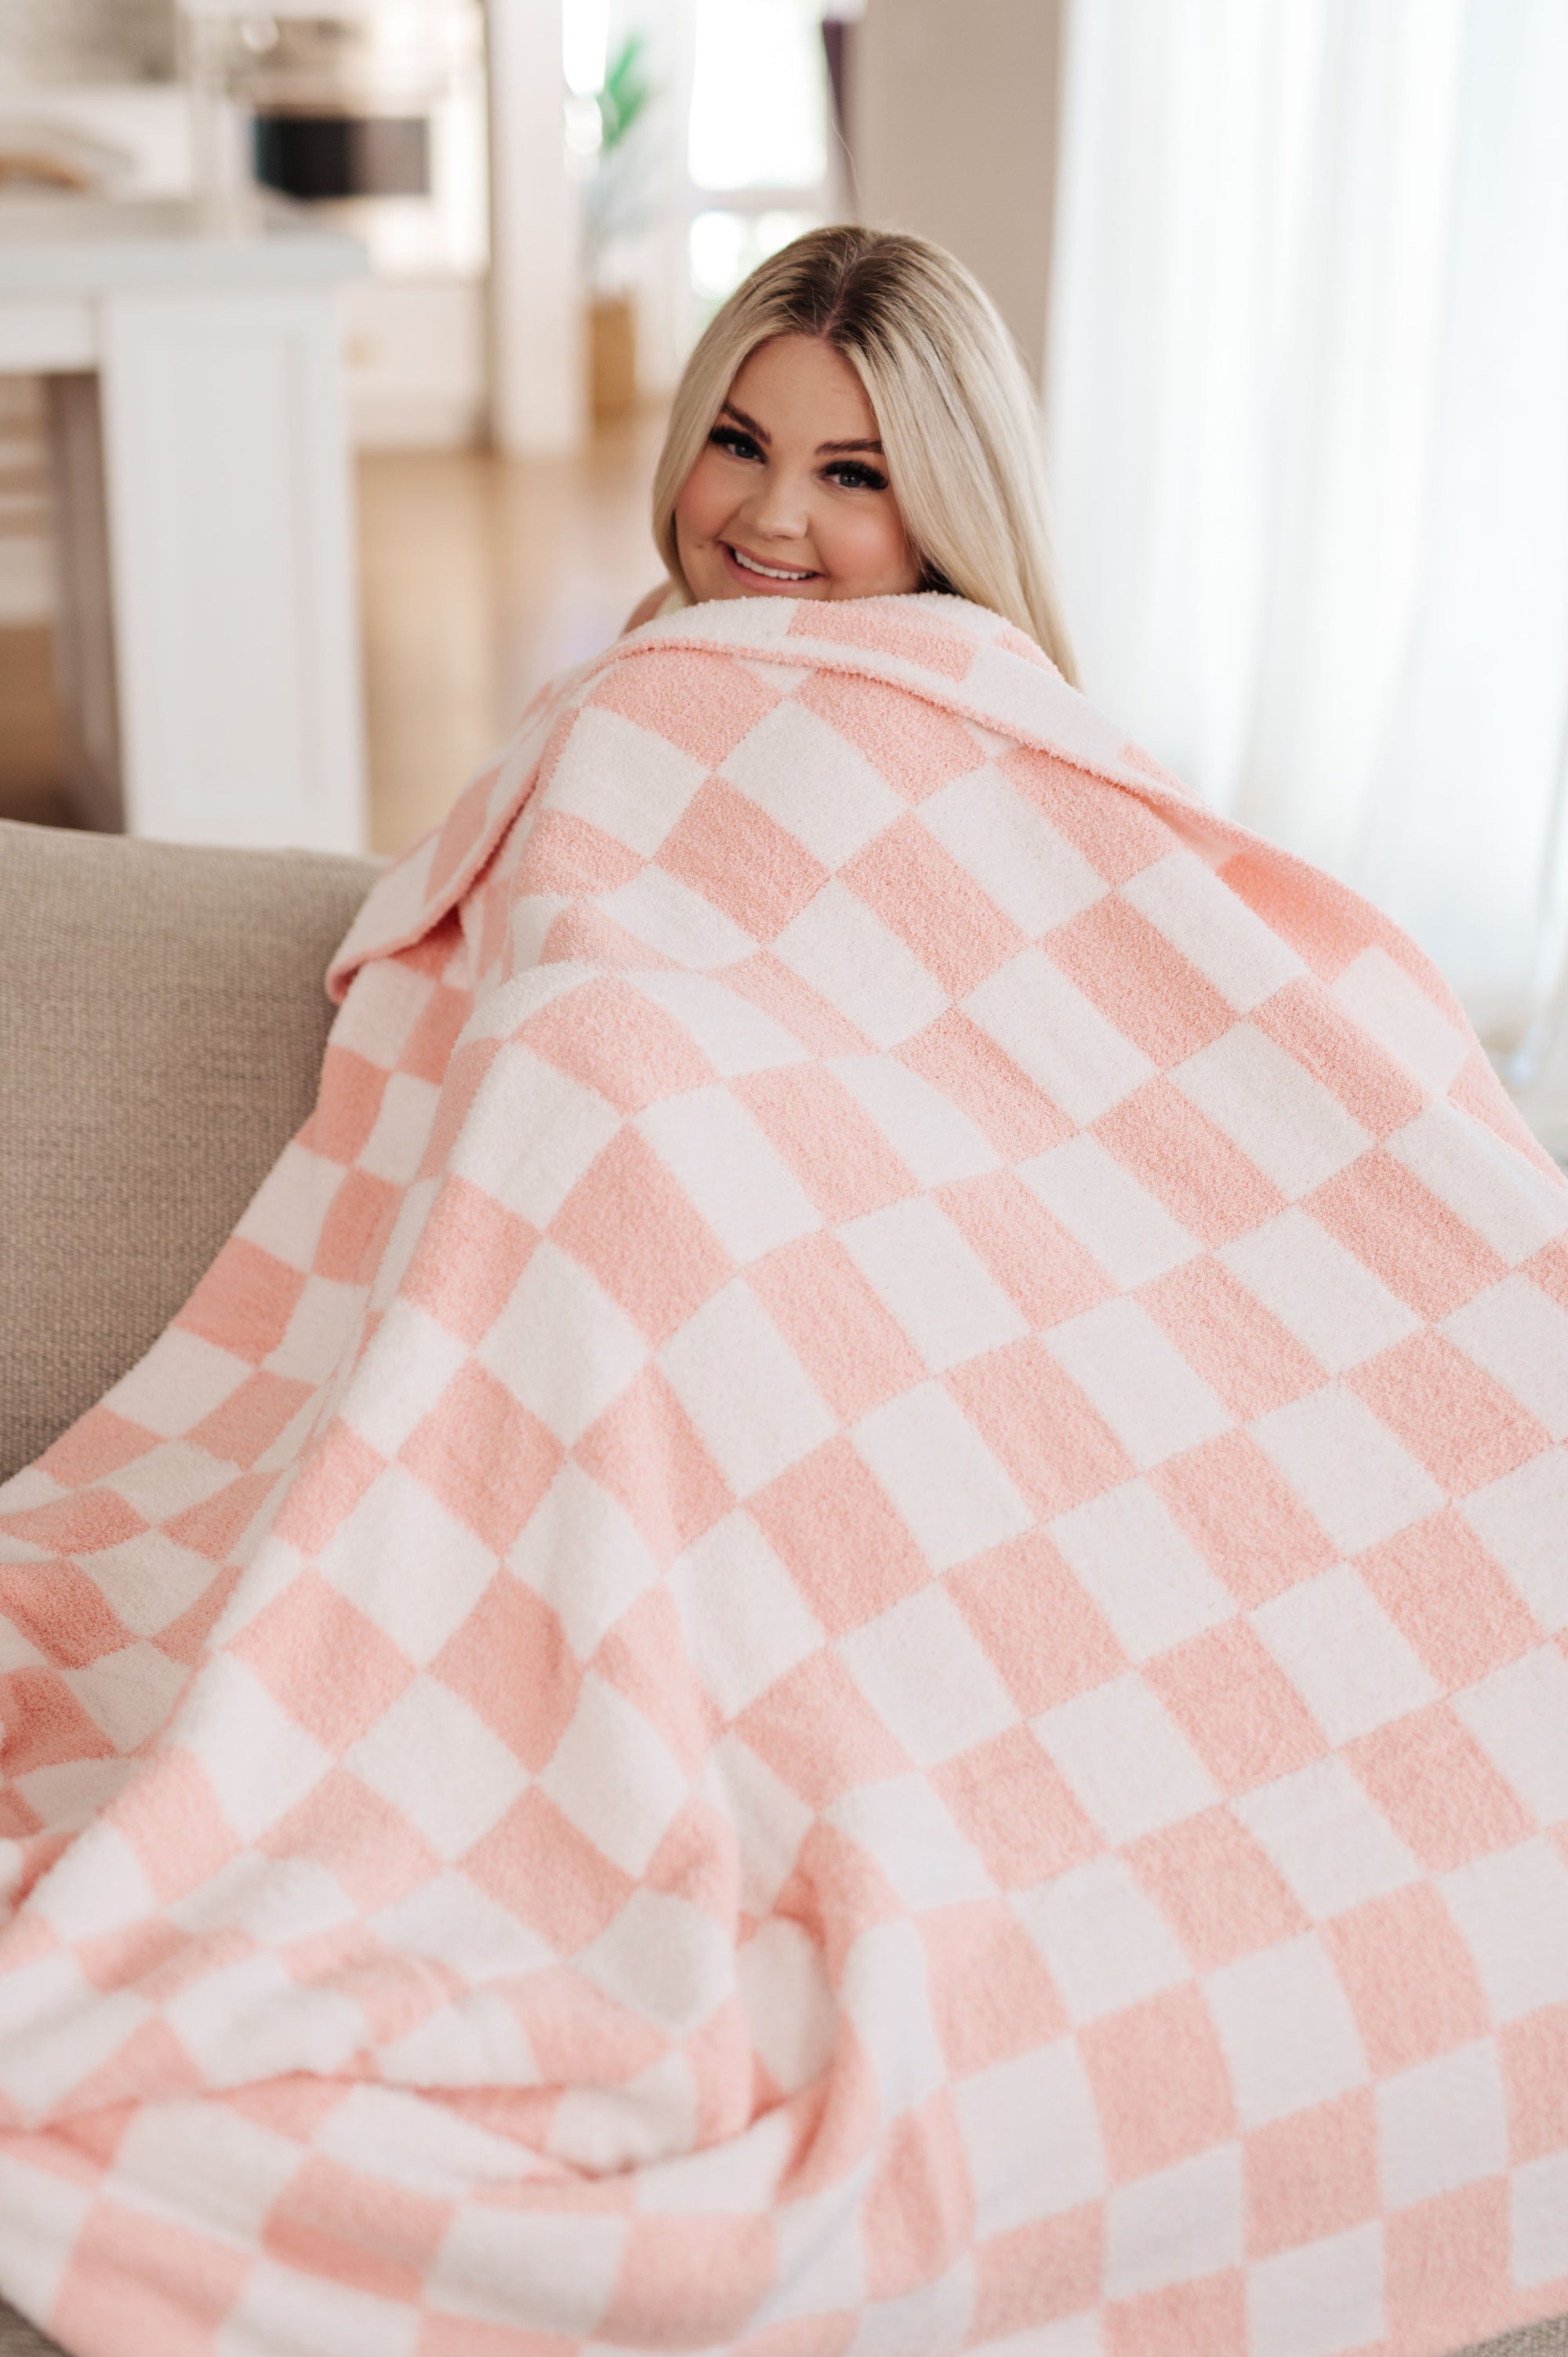 PREORDER: Penny Blanket in Pink